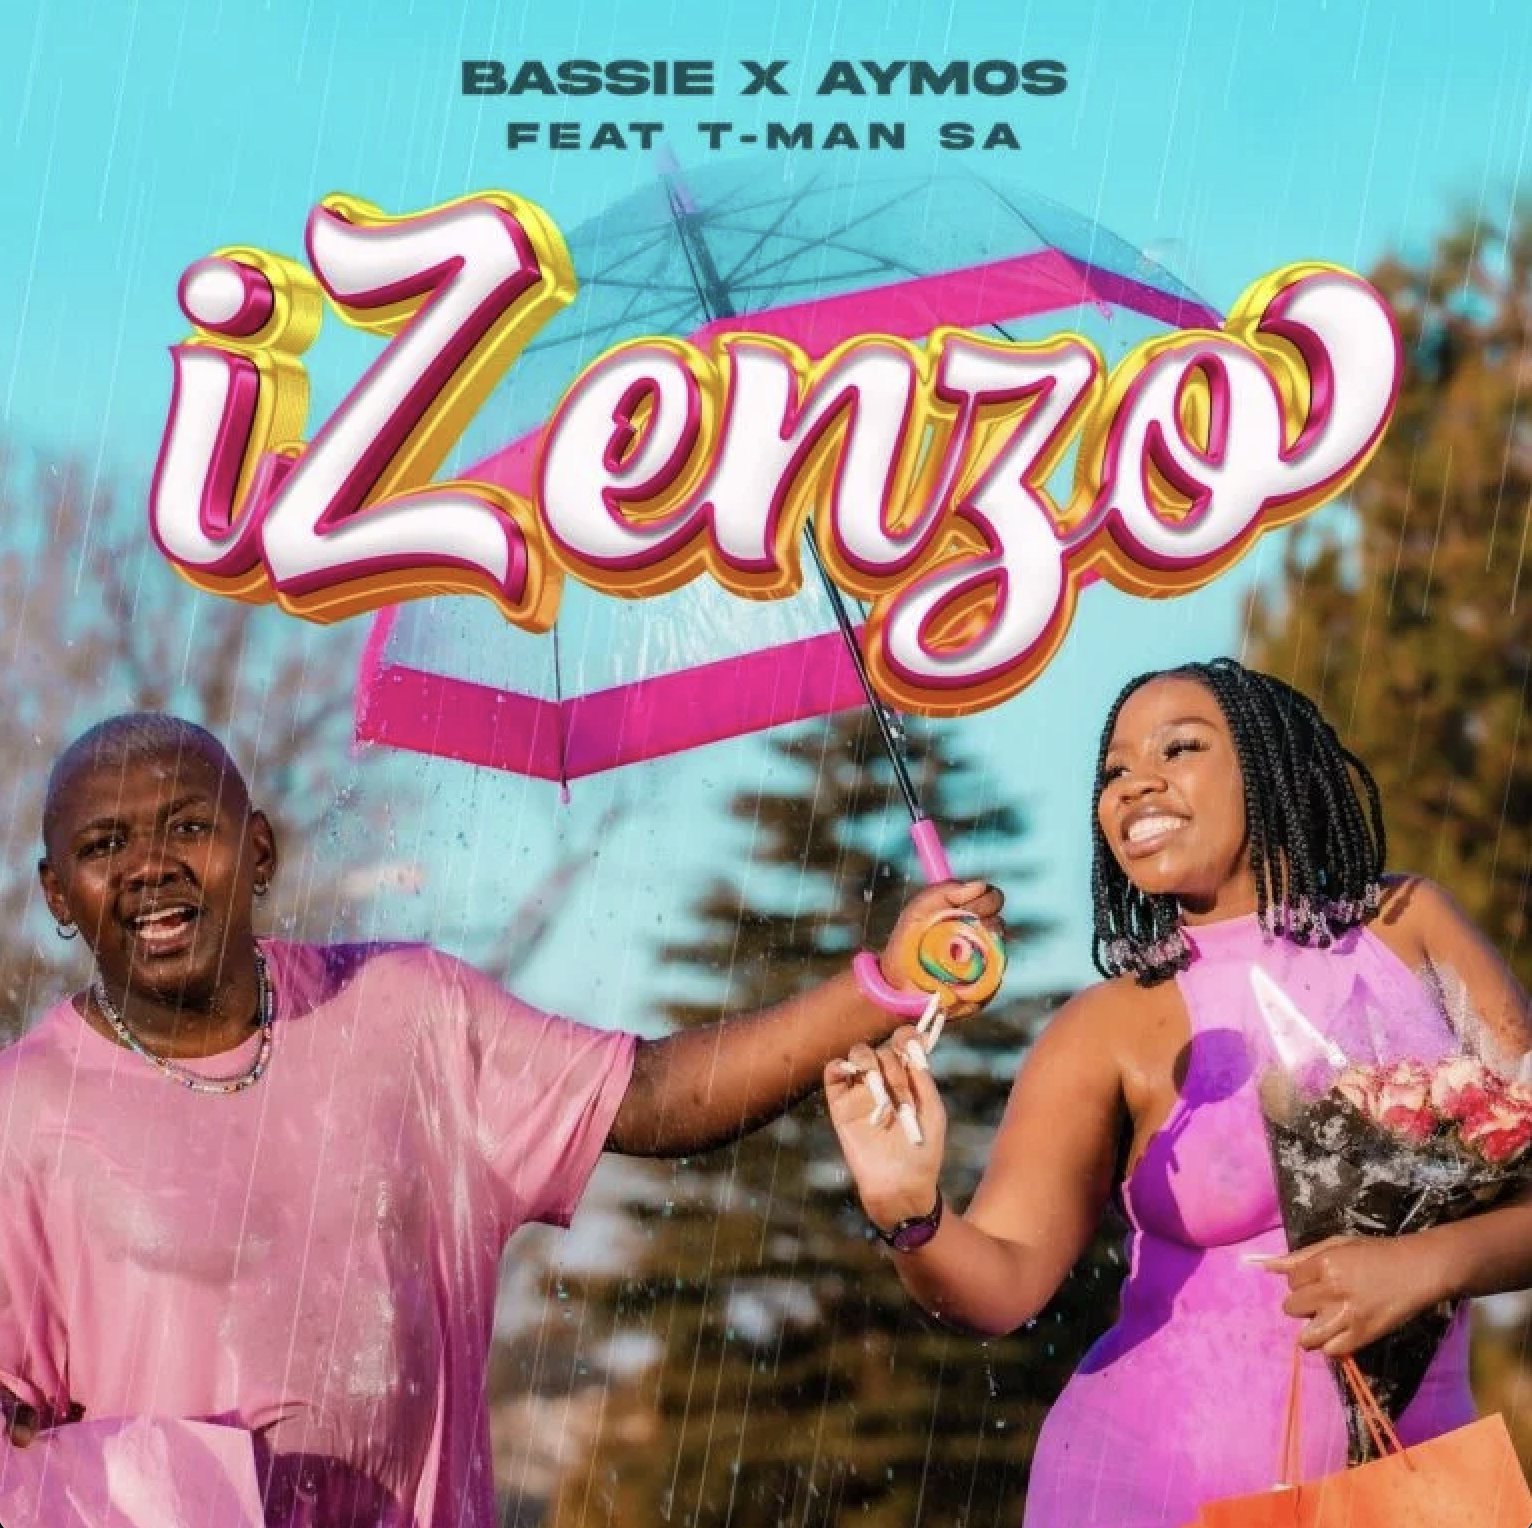 Bassie & Aymos – Izenzo ft. T-Man SA